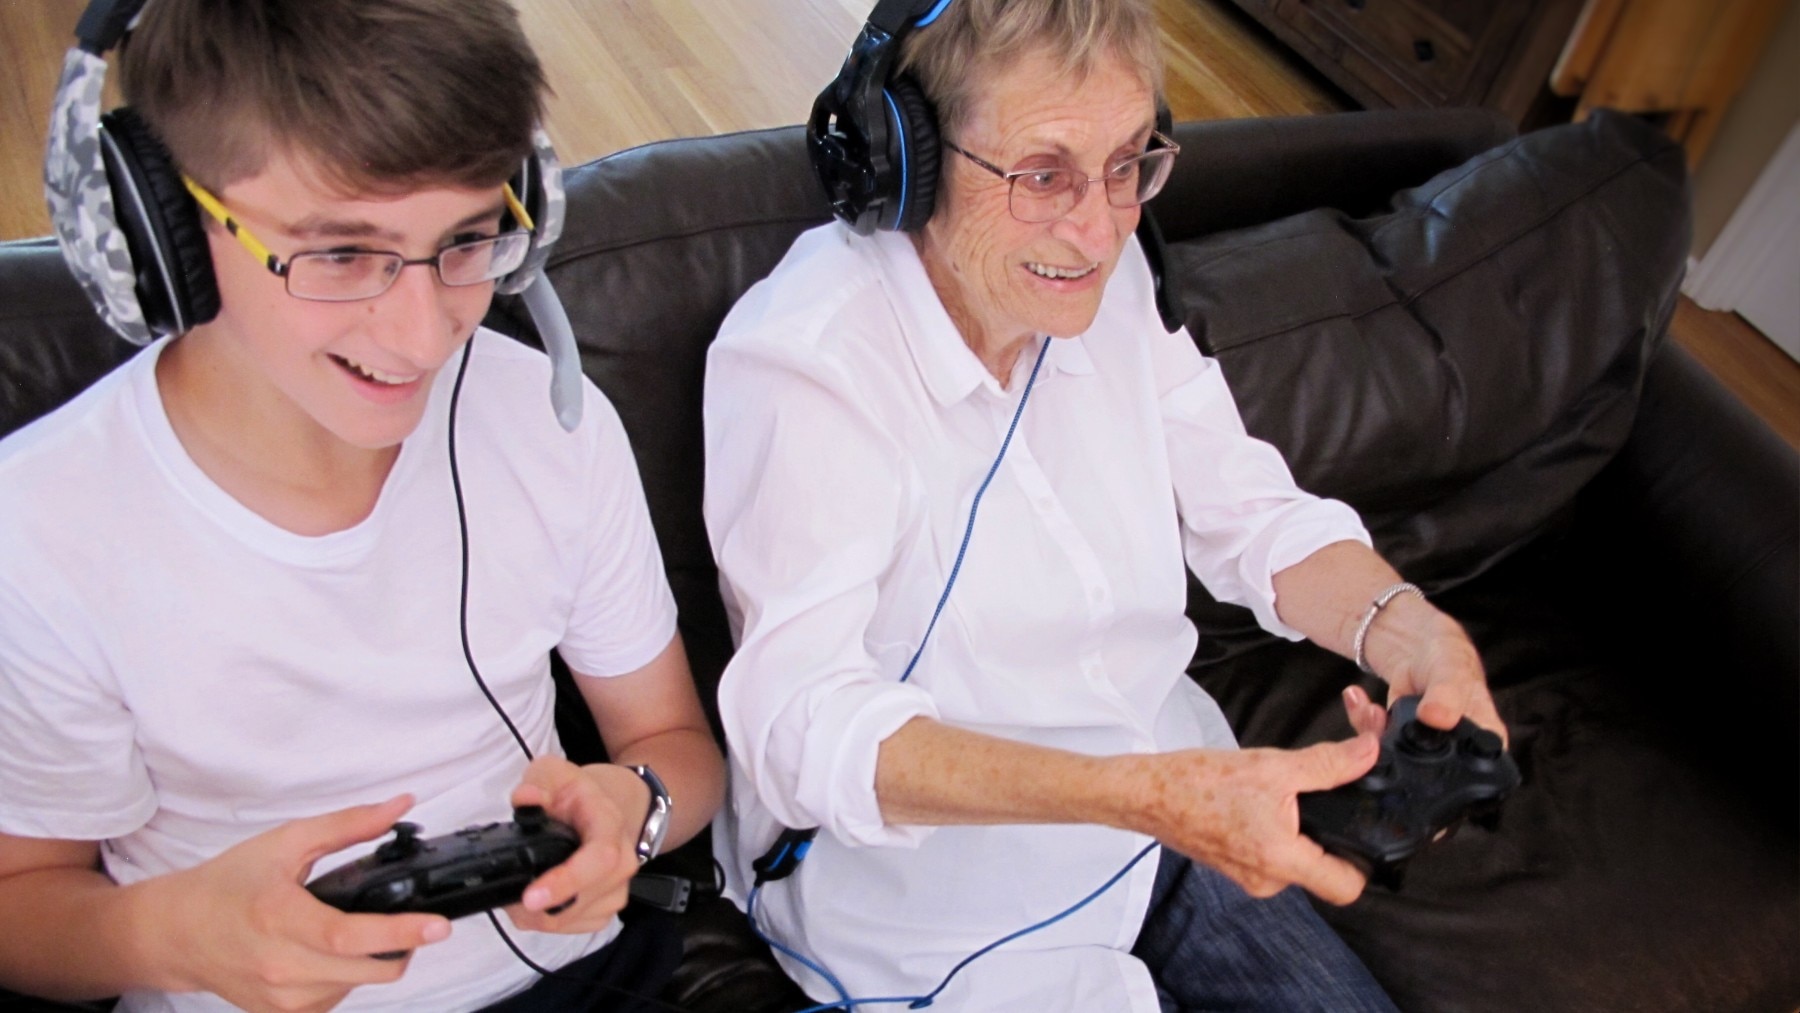 Grandma and grandson playing